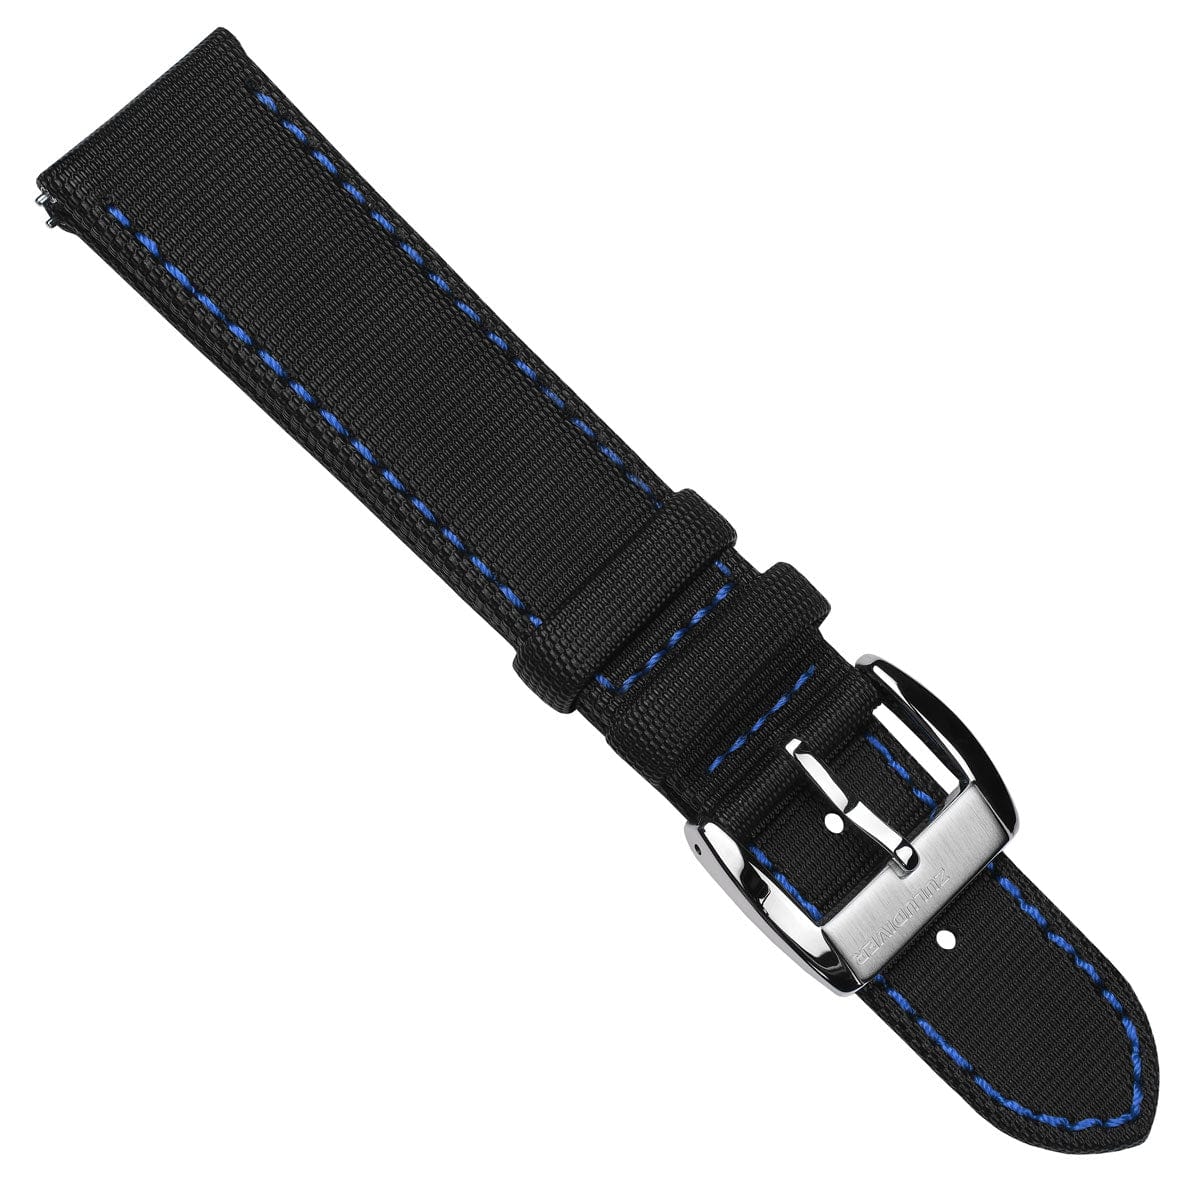 ZULUDIVER Maverick (MK II) Sailcloth Waterproof Watch Strap - Black / Blue